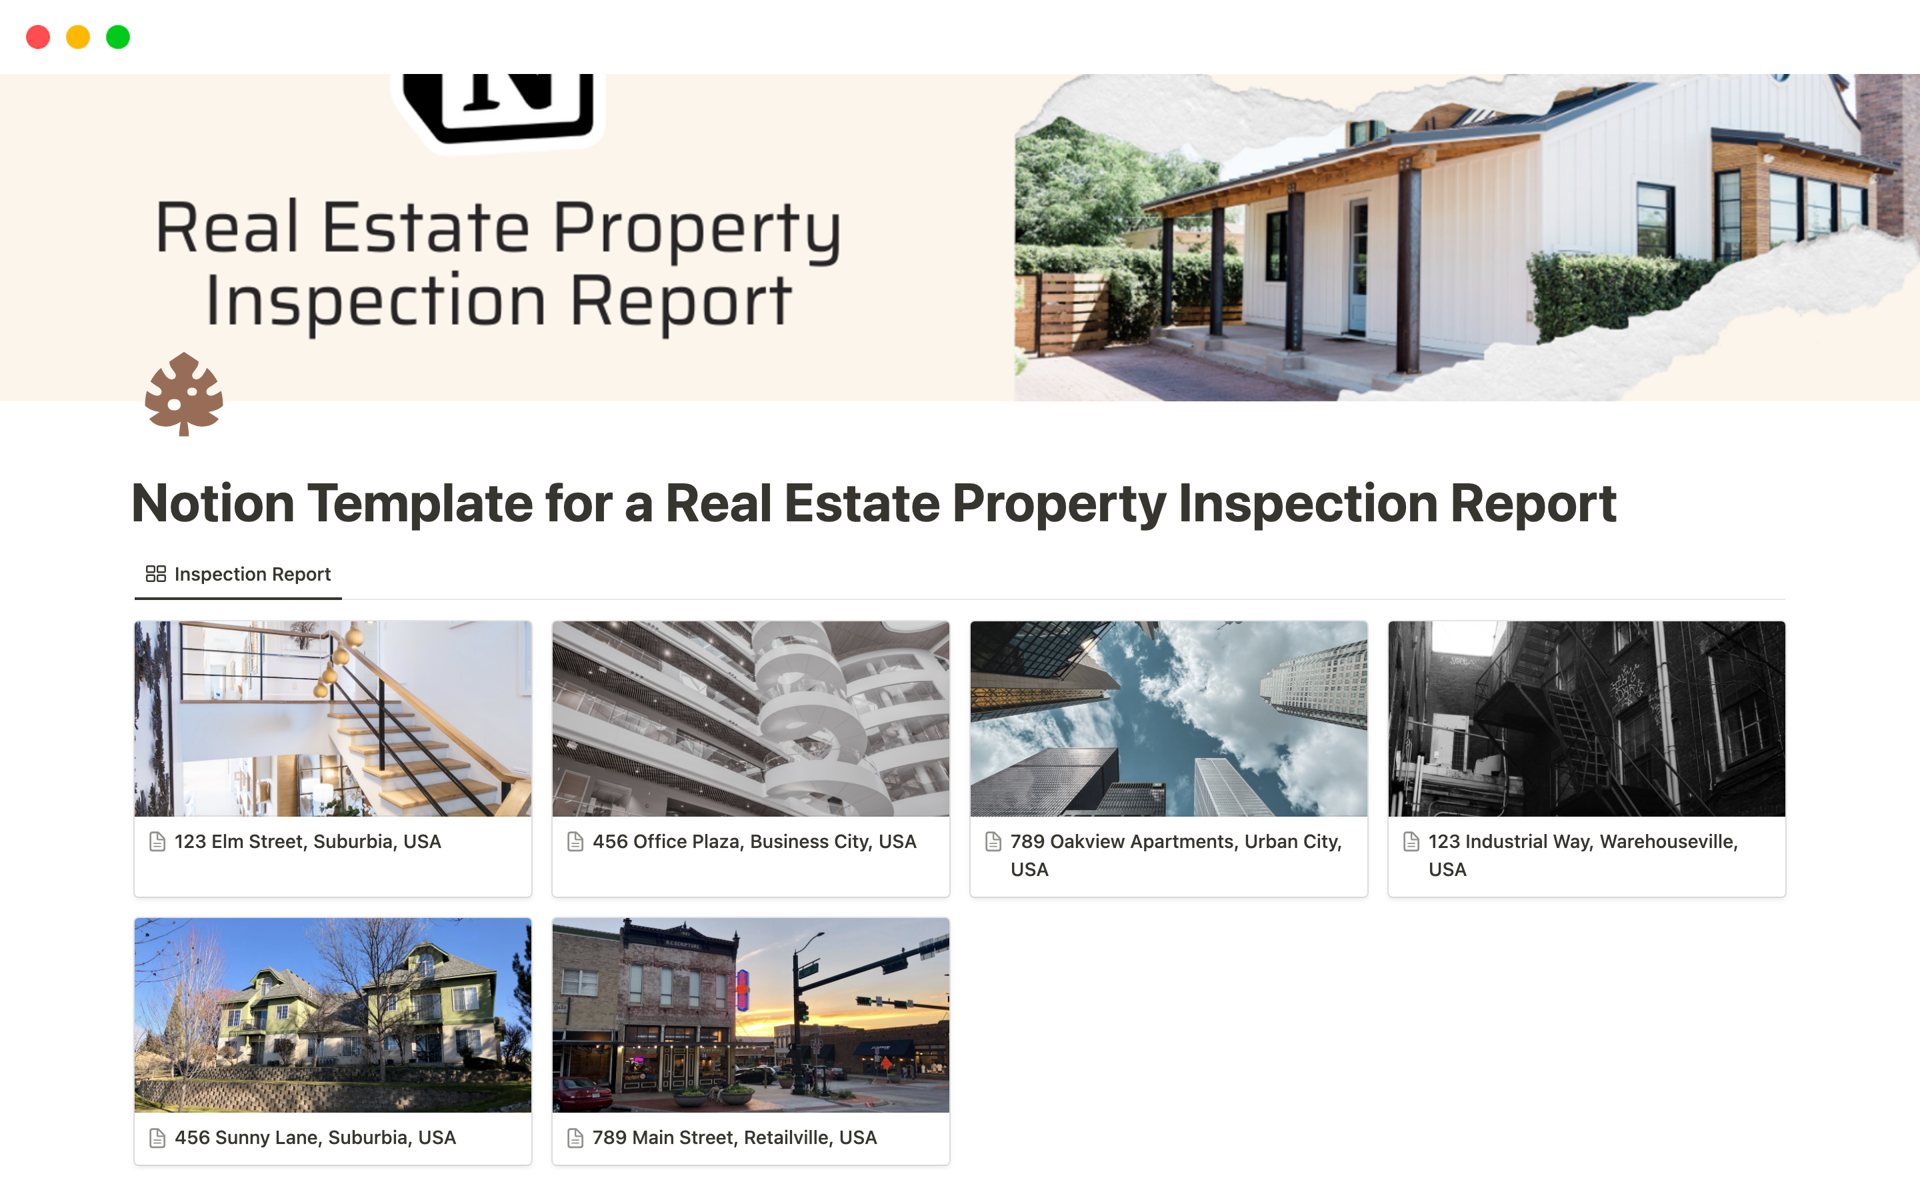 Aperçu du modèle de Real Estate Property Inspection Report